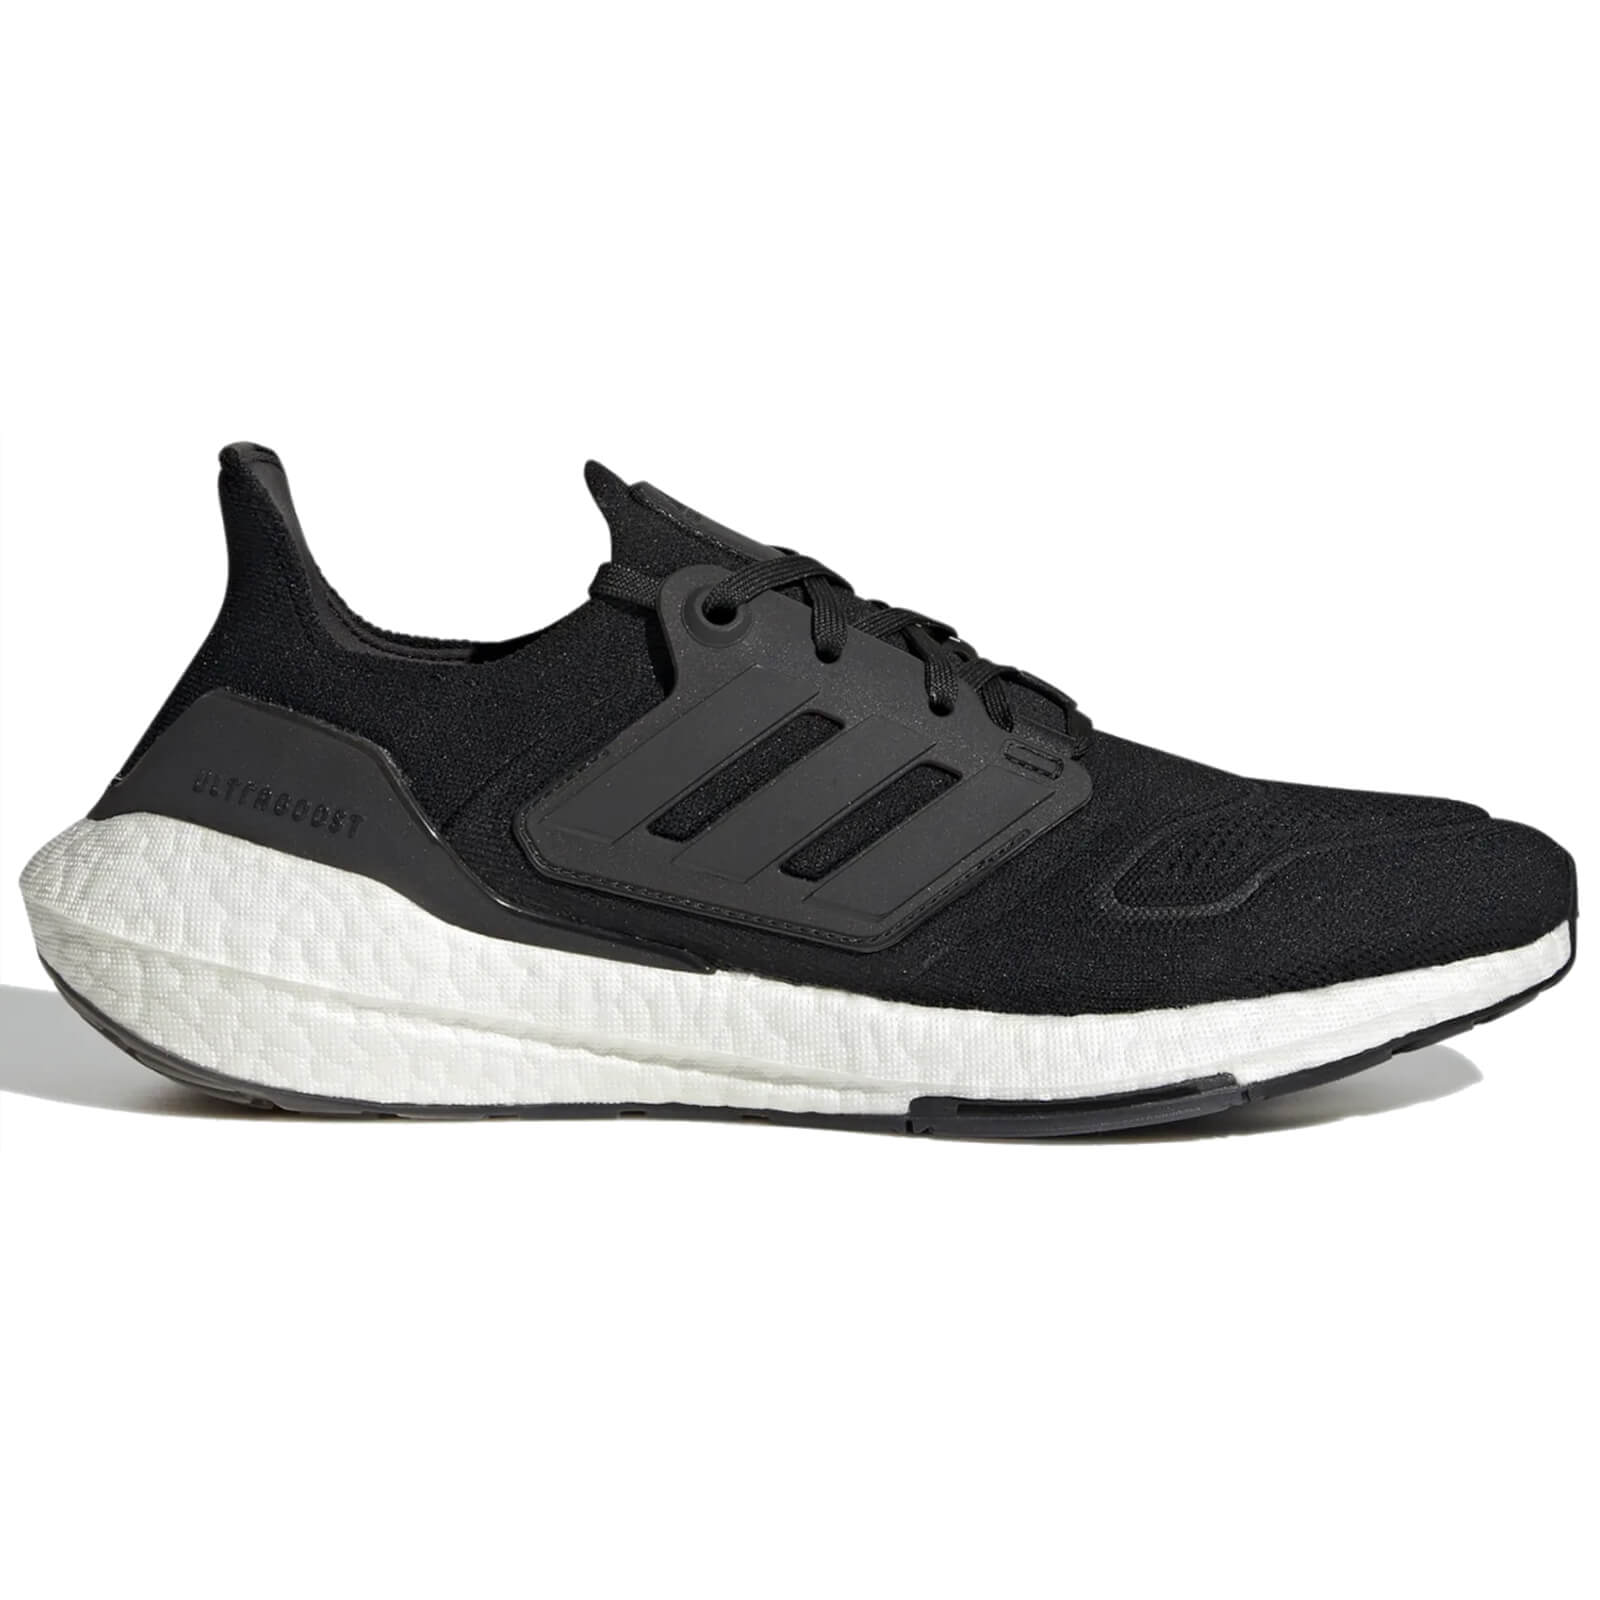 Adidas Ultra Boost 22 Running Shoes - Core Black/Core Black/Ftwr White - US 7.5/UK 7